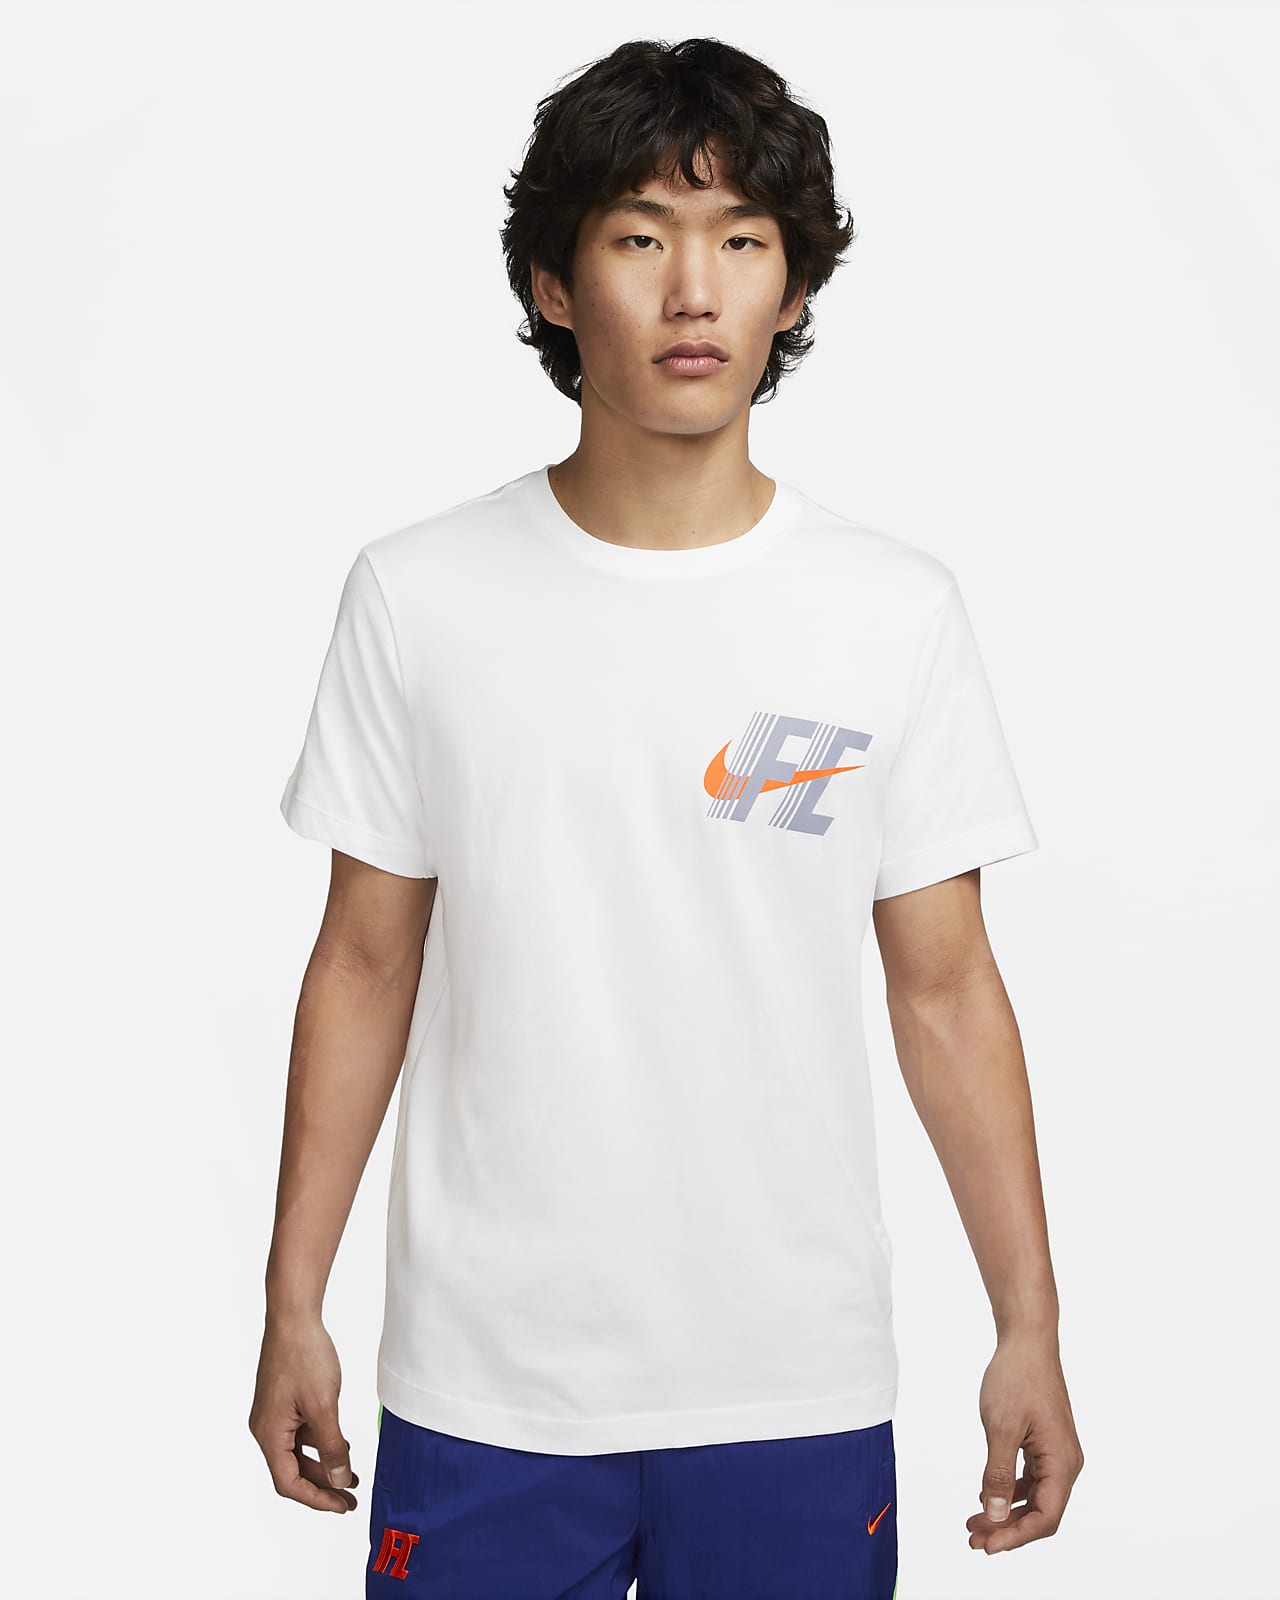 Nike F.C. Nike Soccer T-Shirt. JP